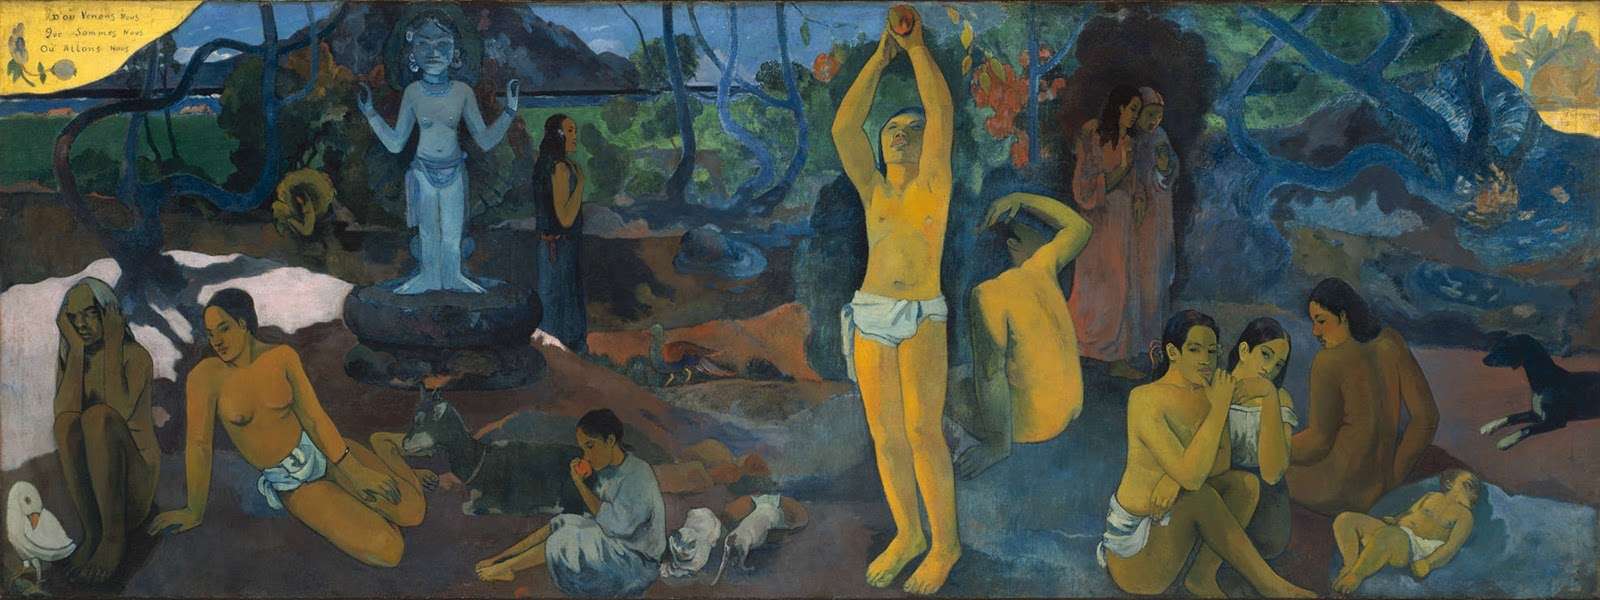 Poza lui Gauguin jigsaw puzzle online